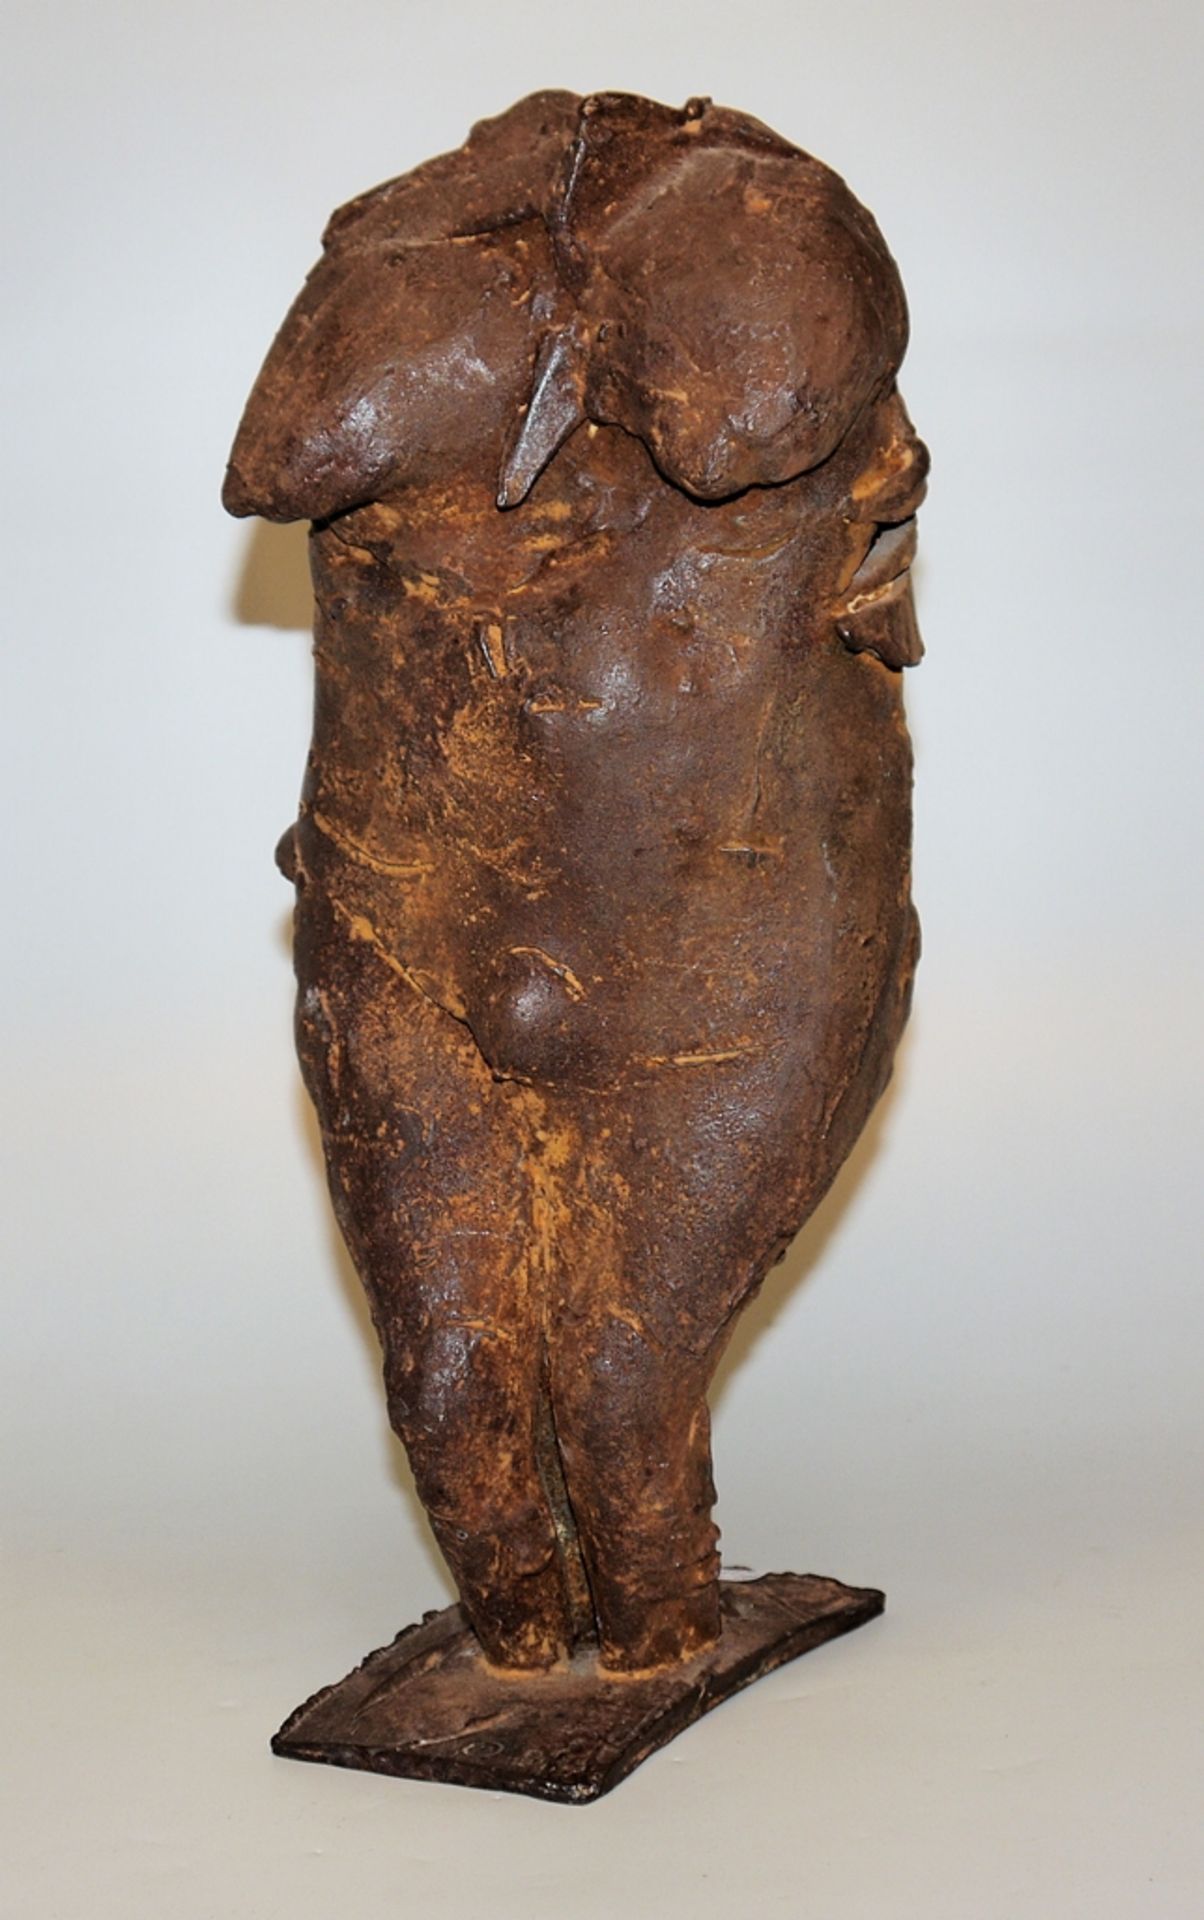 Thomas Duttenhoefer, "Earth" - voluptuous female nude, iron sculpture c. 1991/92, with monographic 